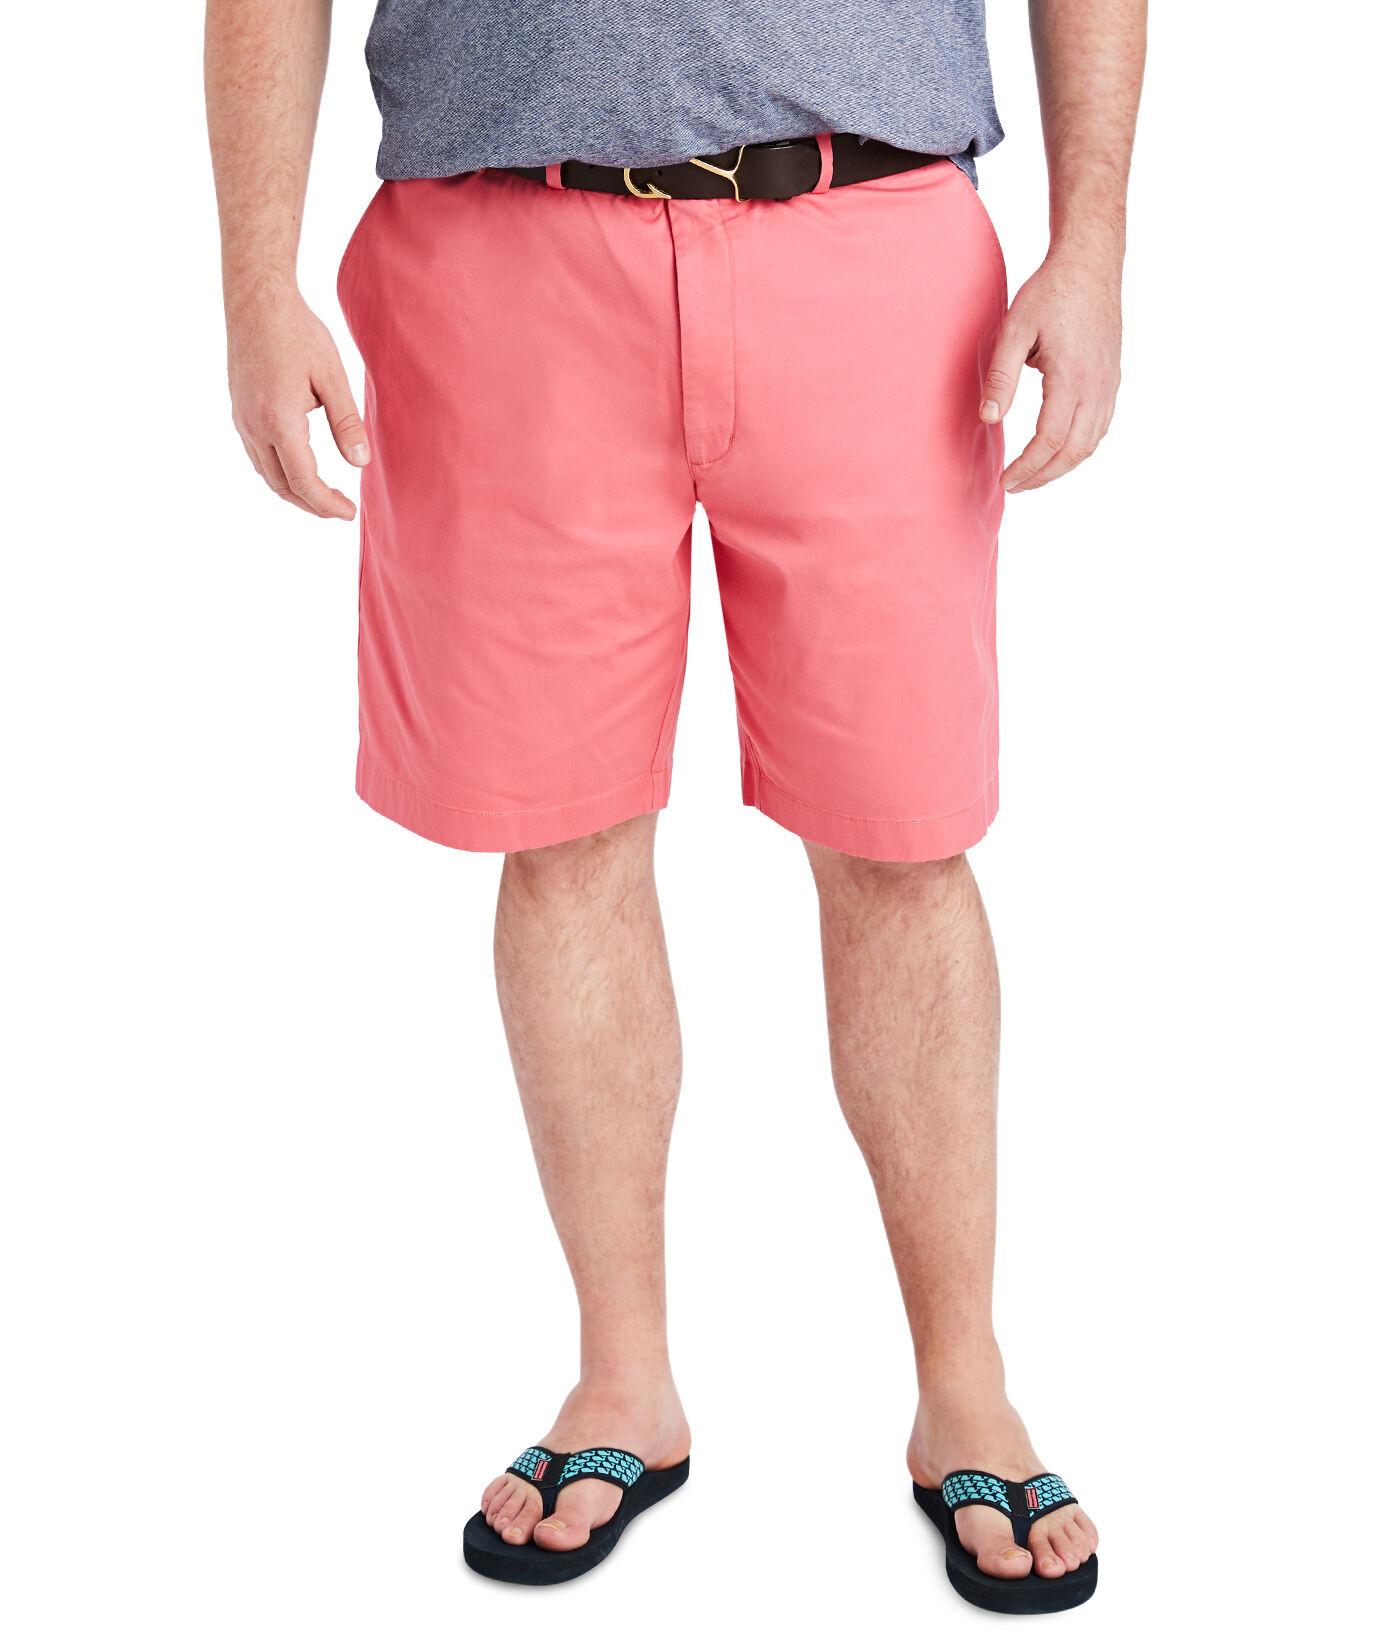 Vineyard Vines Cotton 11 Inch Stretch Shorts in Pink for Men - Lyst